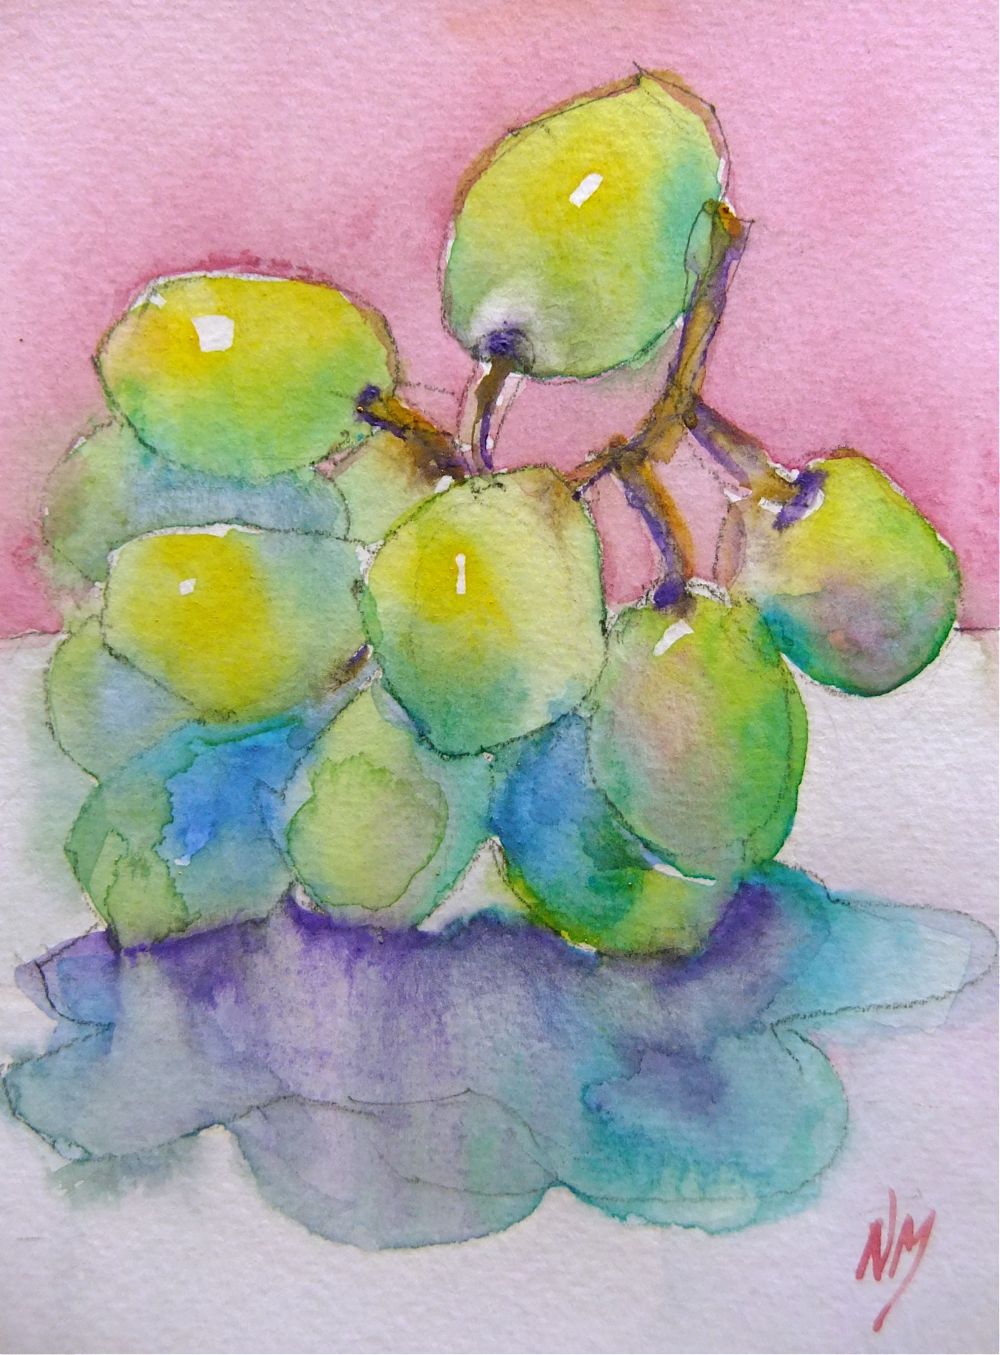 watercolour painting grapes still life Nora MacPhail.jpg - Nora  Mac  Phail  (01)